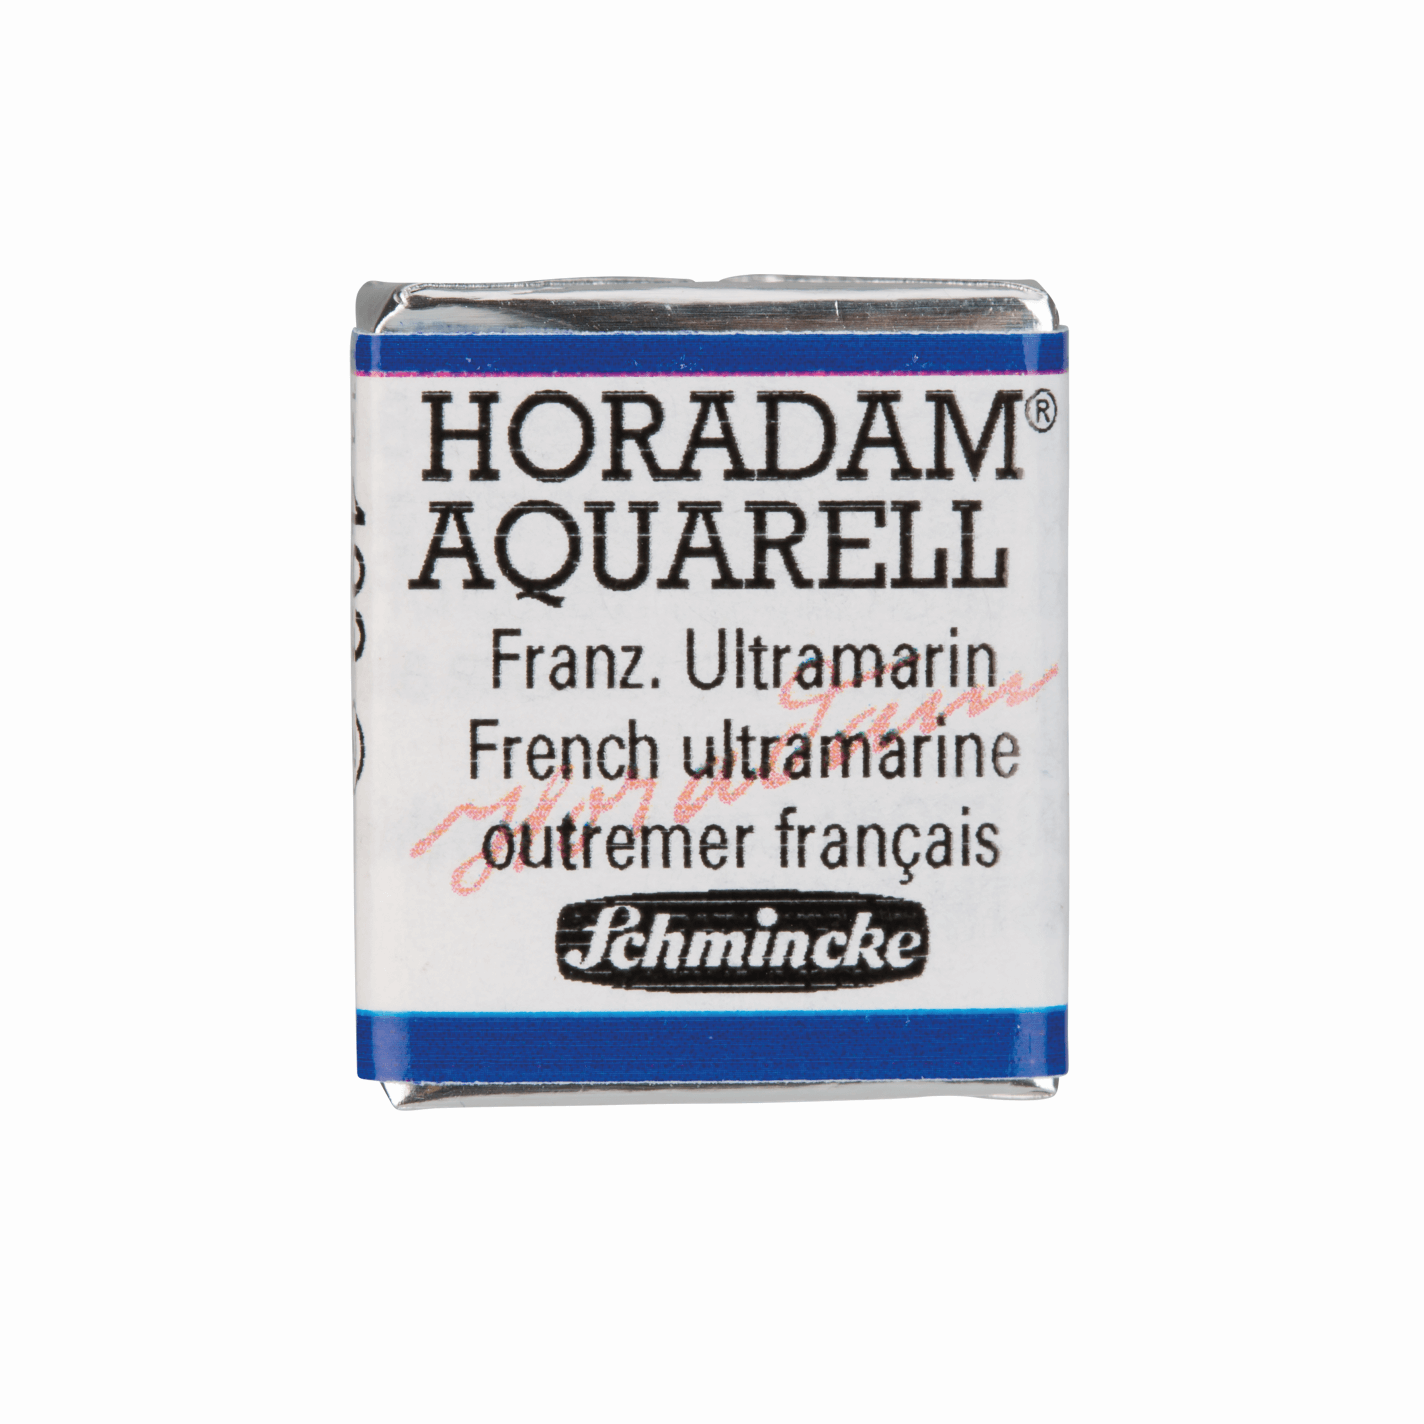 Schmincke Horadam Aquarell pans 1/2 pan French Ultramarine